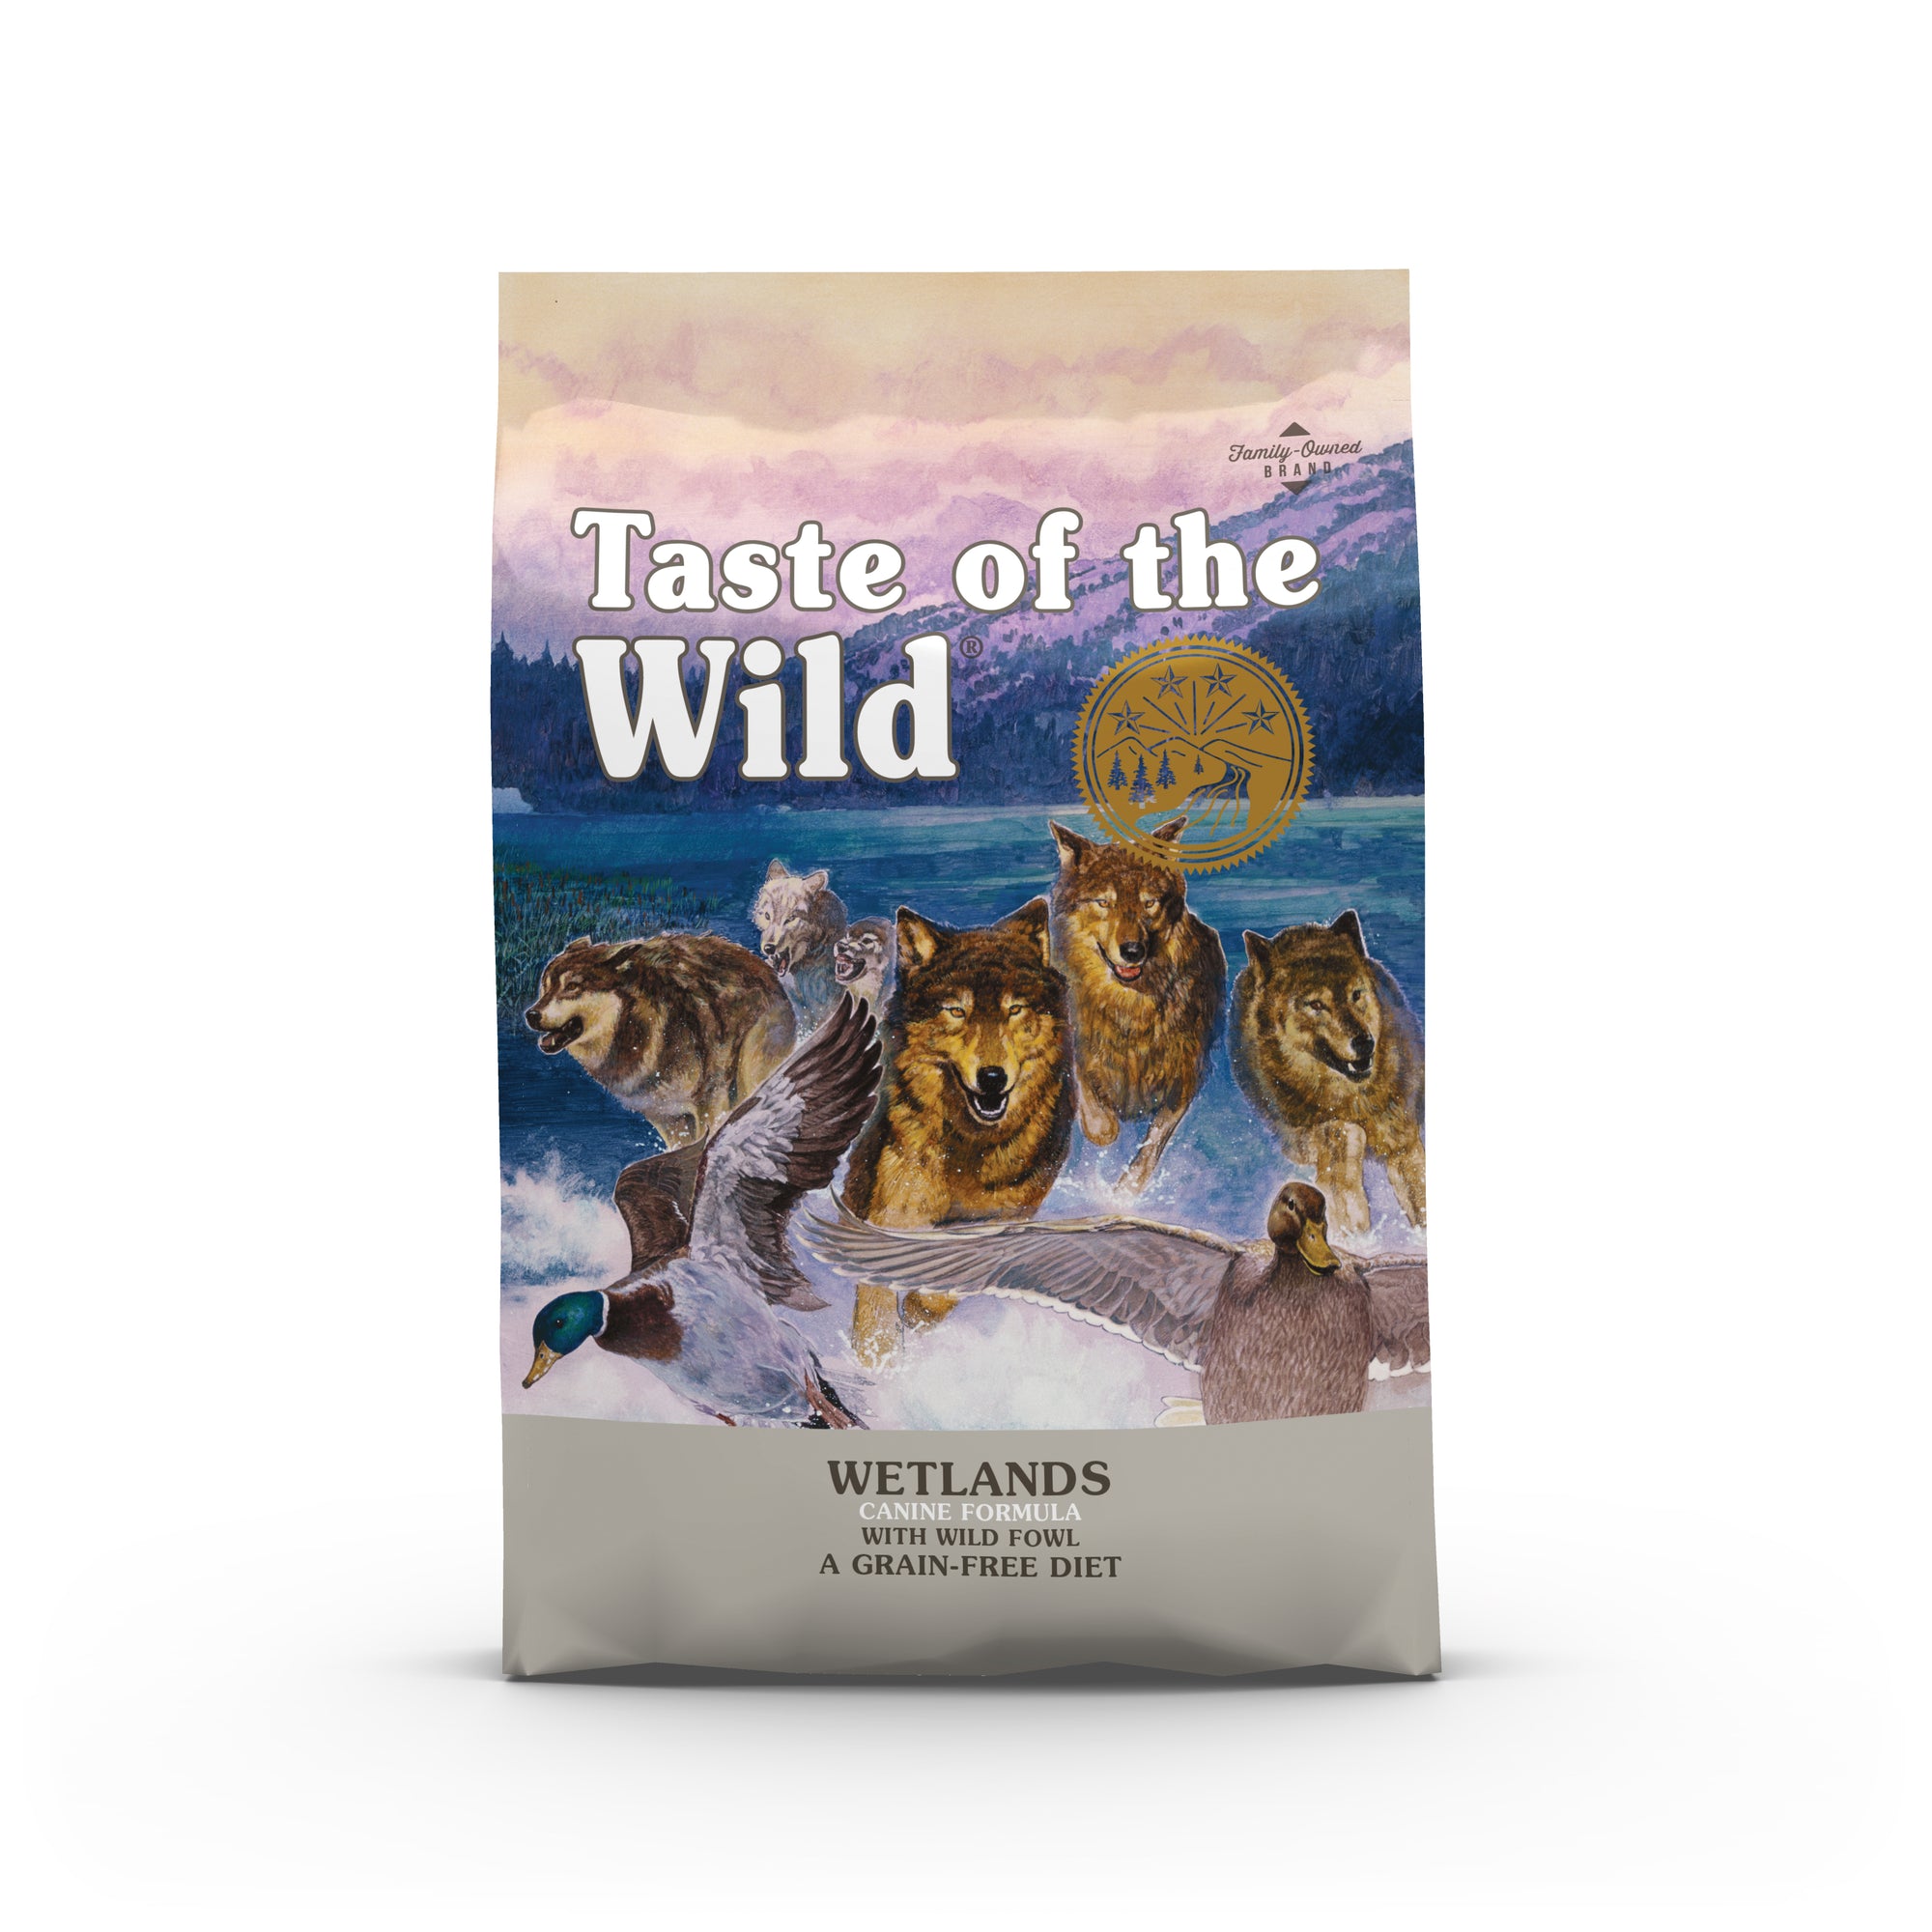 Taste Of The Wild Wetlands Canine 12.2Kg - 74198612215 Front - Copy - Copy.jpg